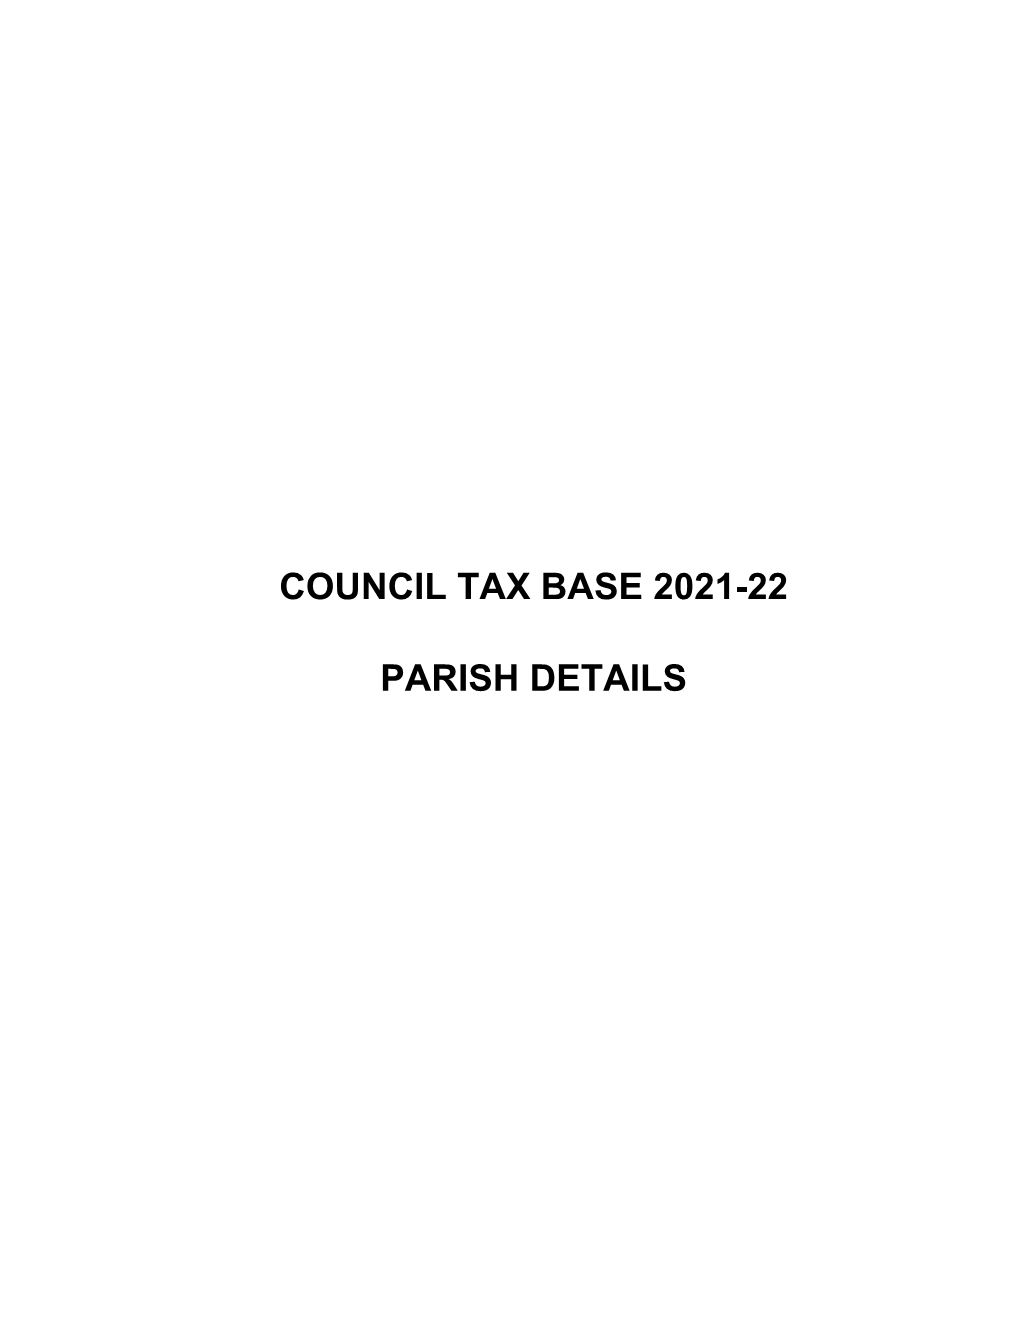 Council Tax Base 2021/22